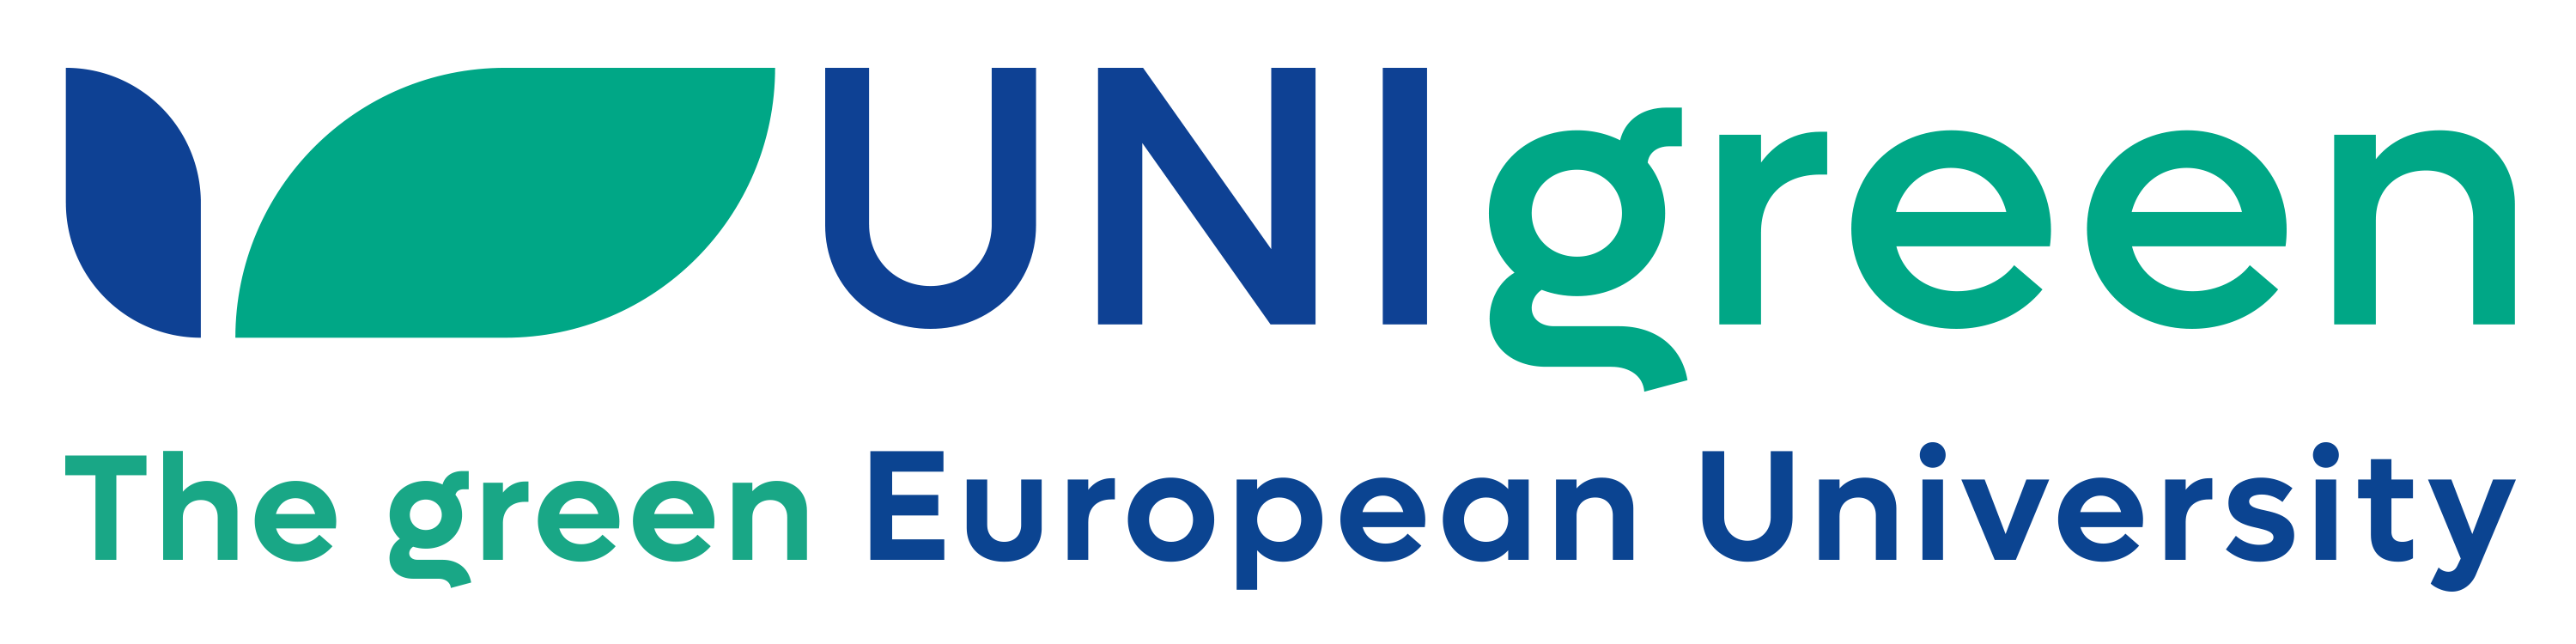 Unigreen logo